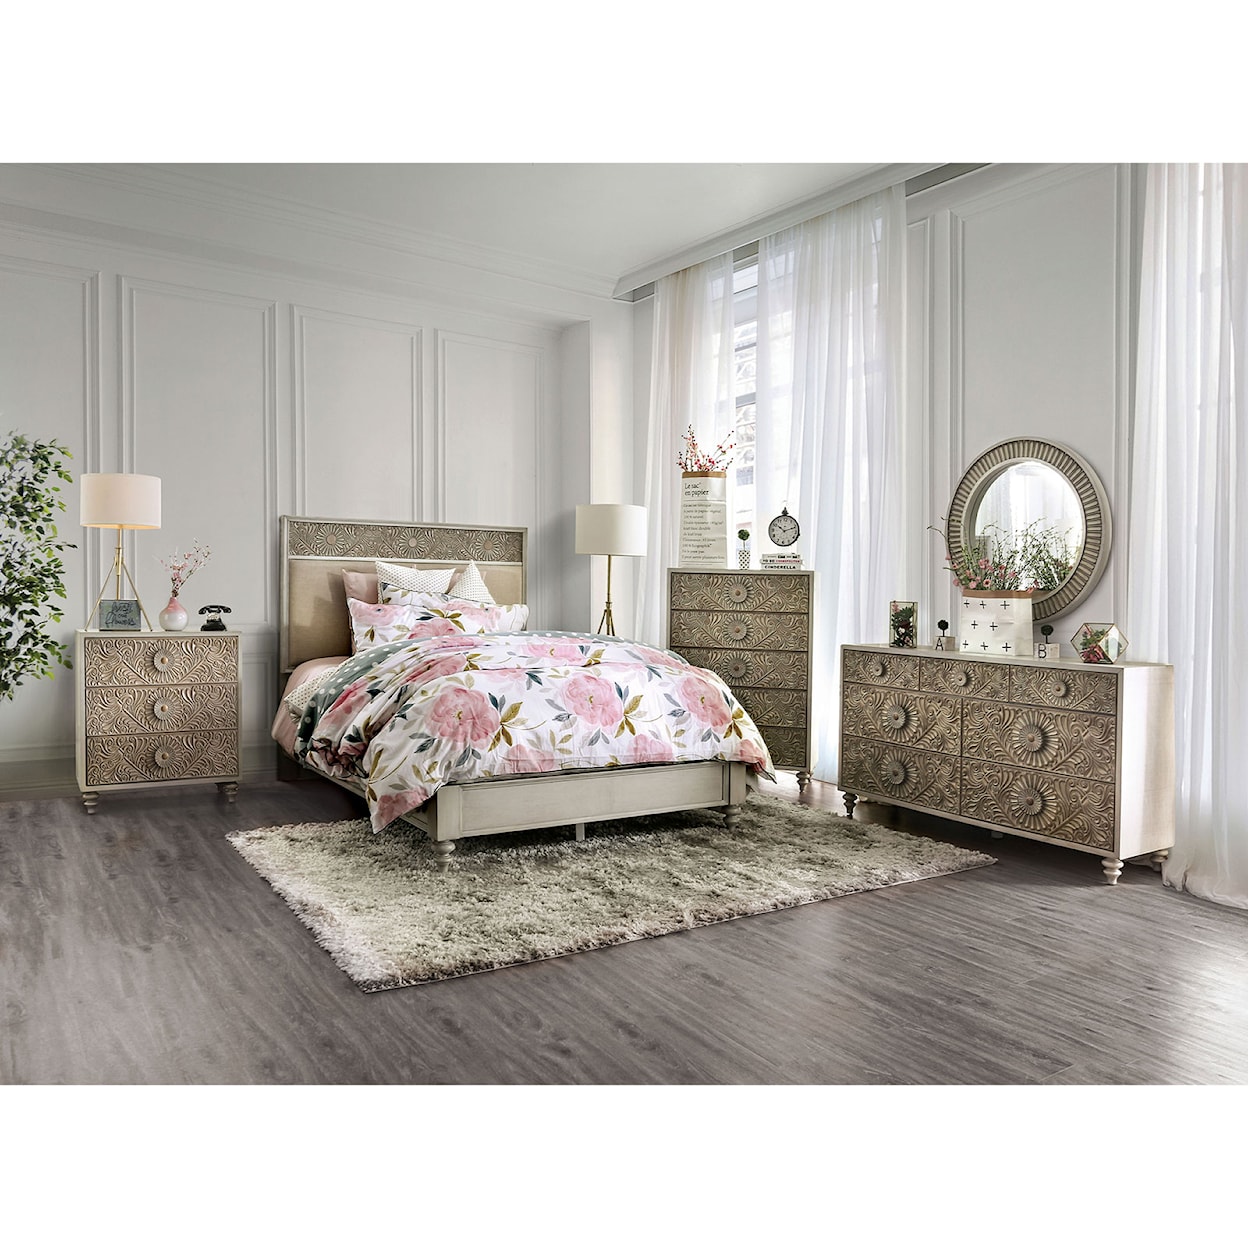 Furniture of America Jakarta California King Bedroom Group